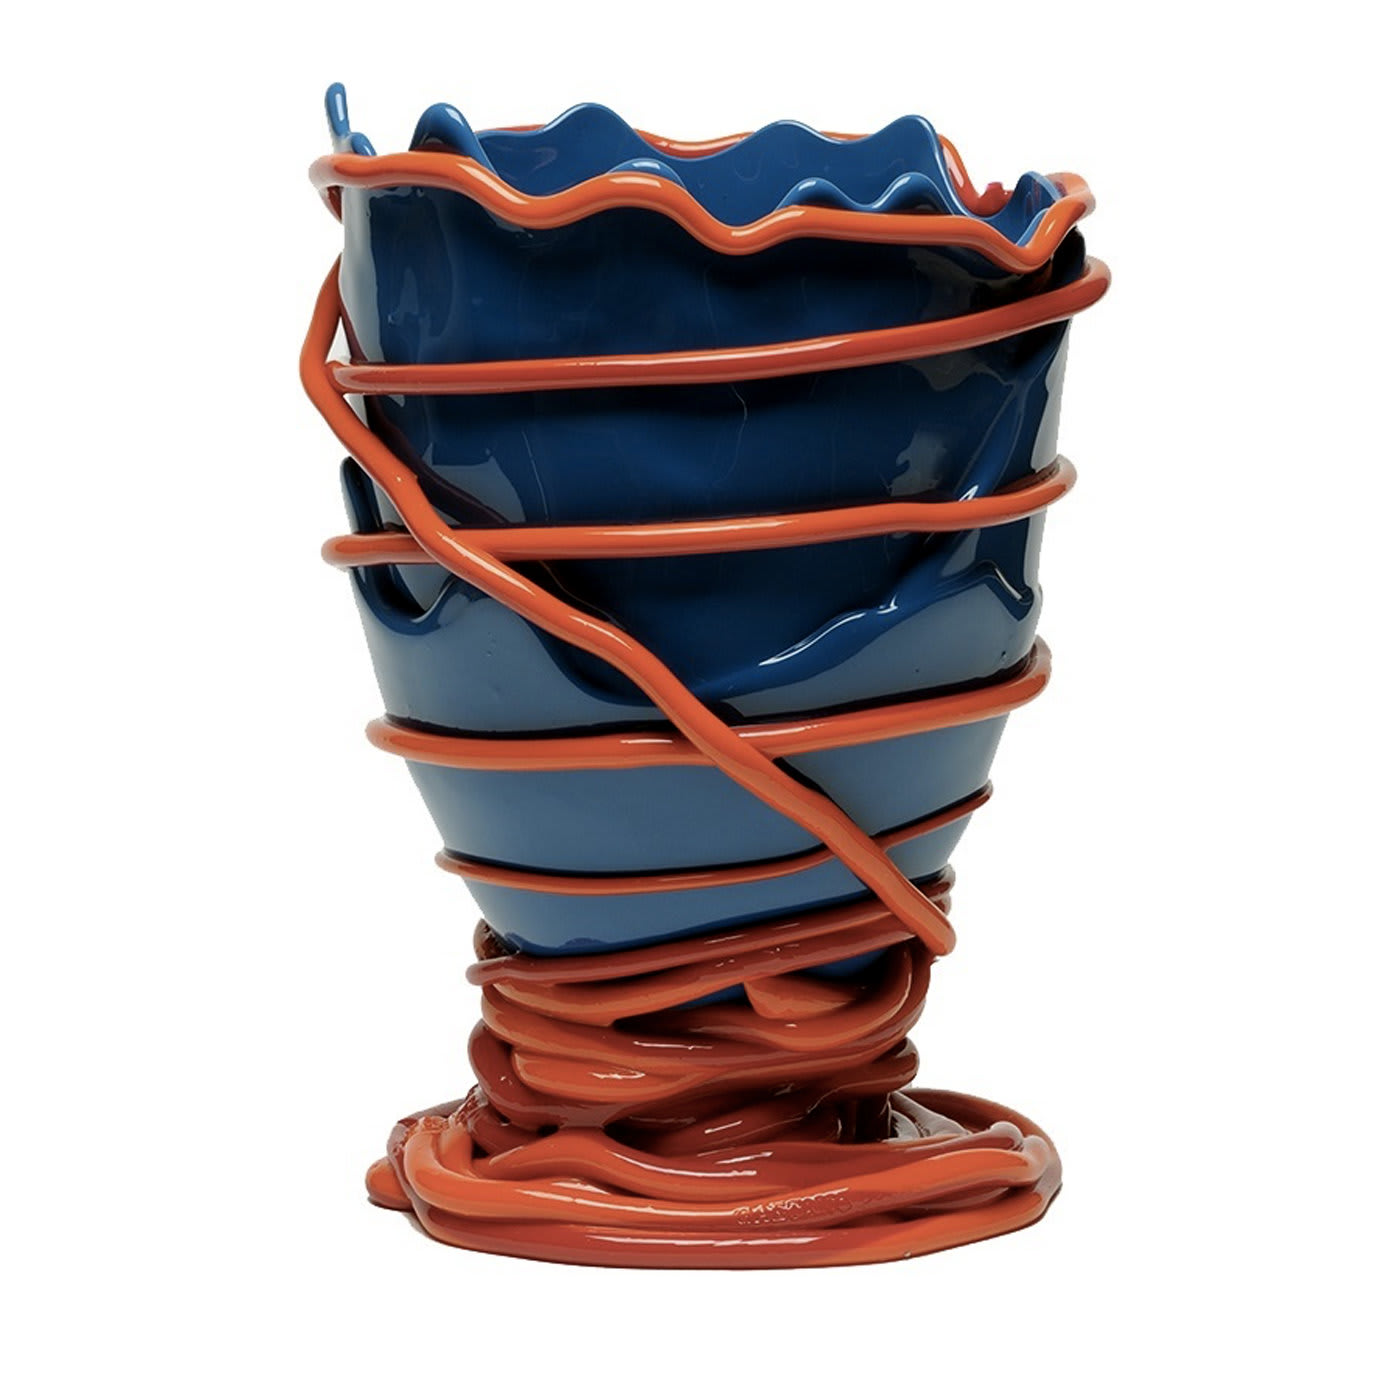 Pompitu II Medium Red and Blue Vase by Gaetano Pesce - Corsi Design Factory